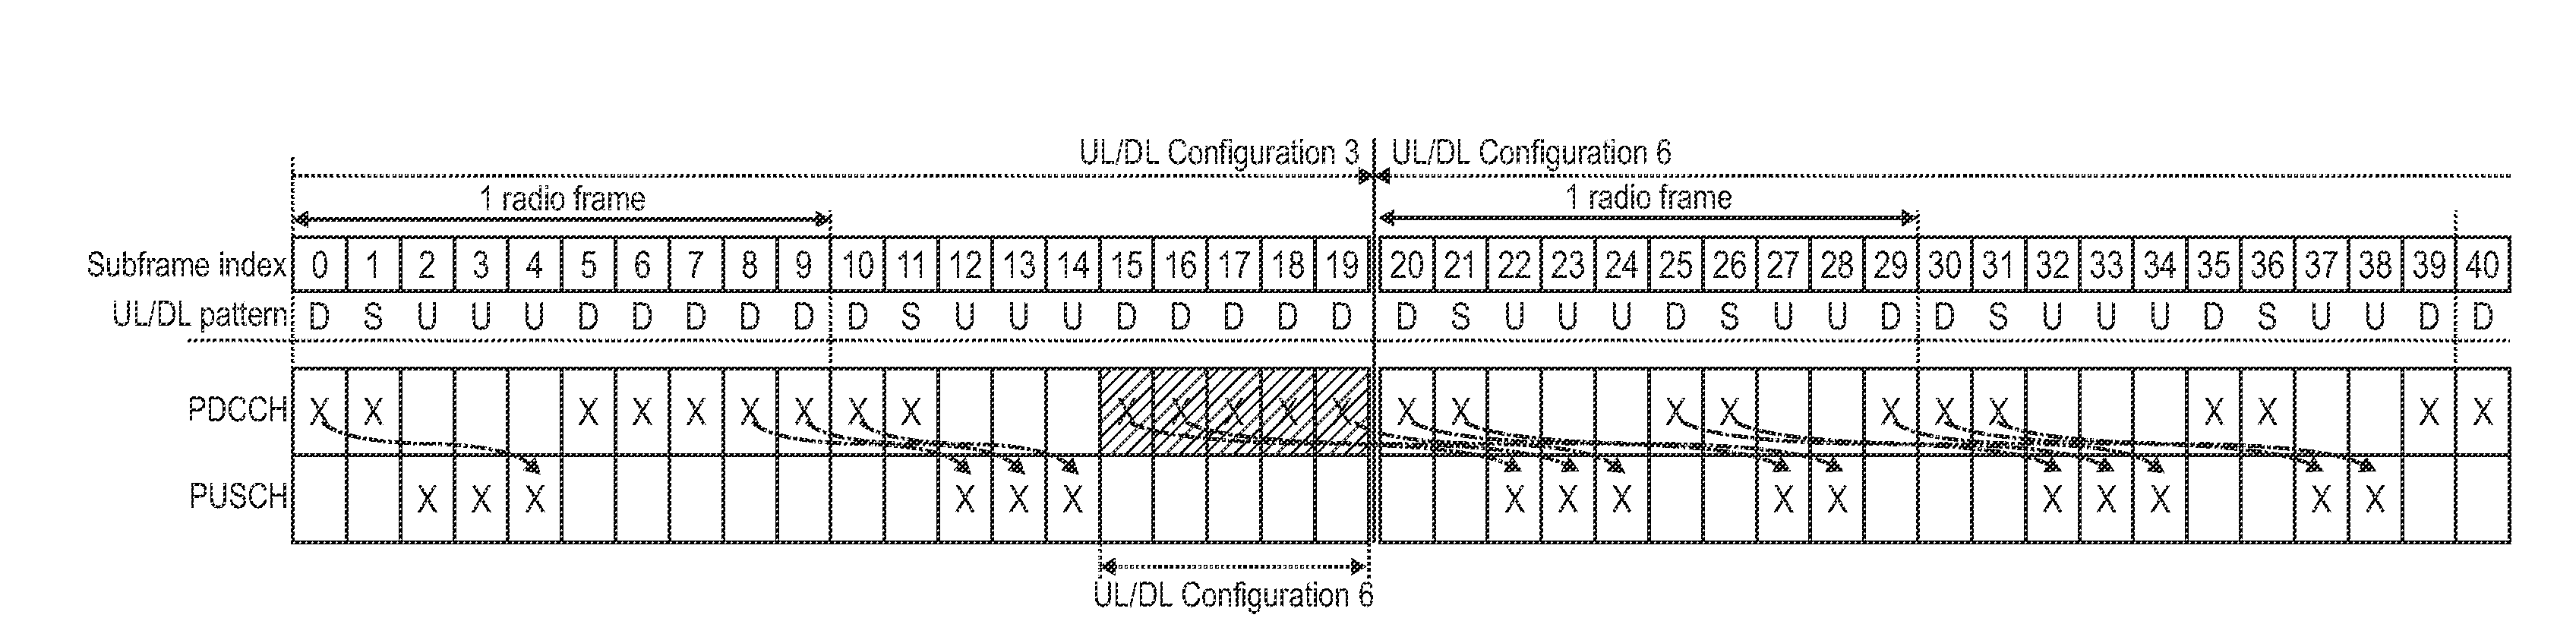 TDD uplink/downlink re-configuration mechanism